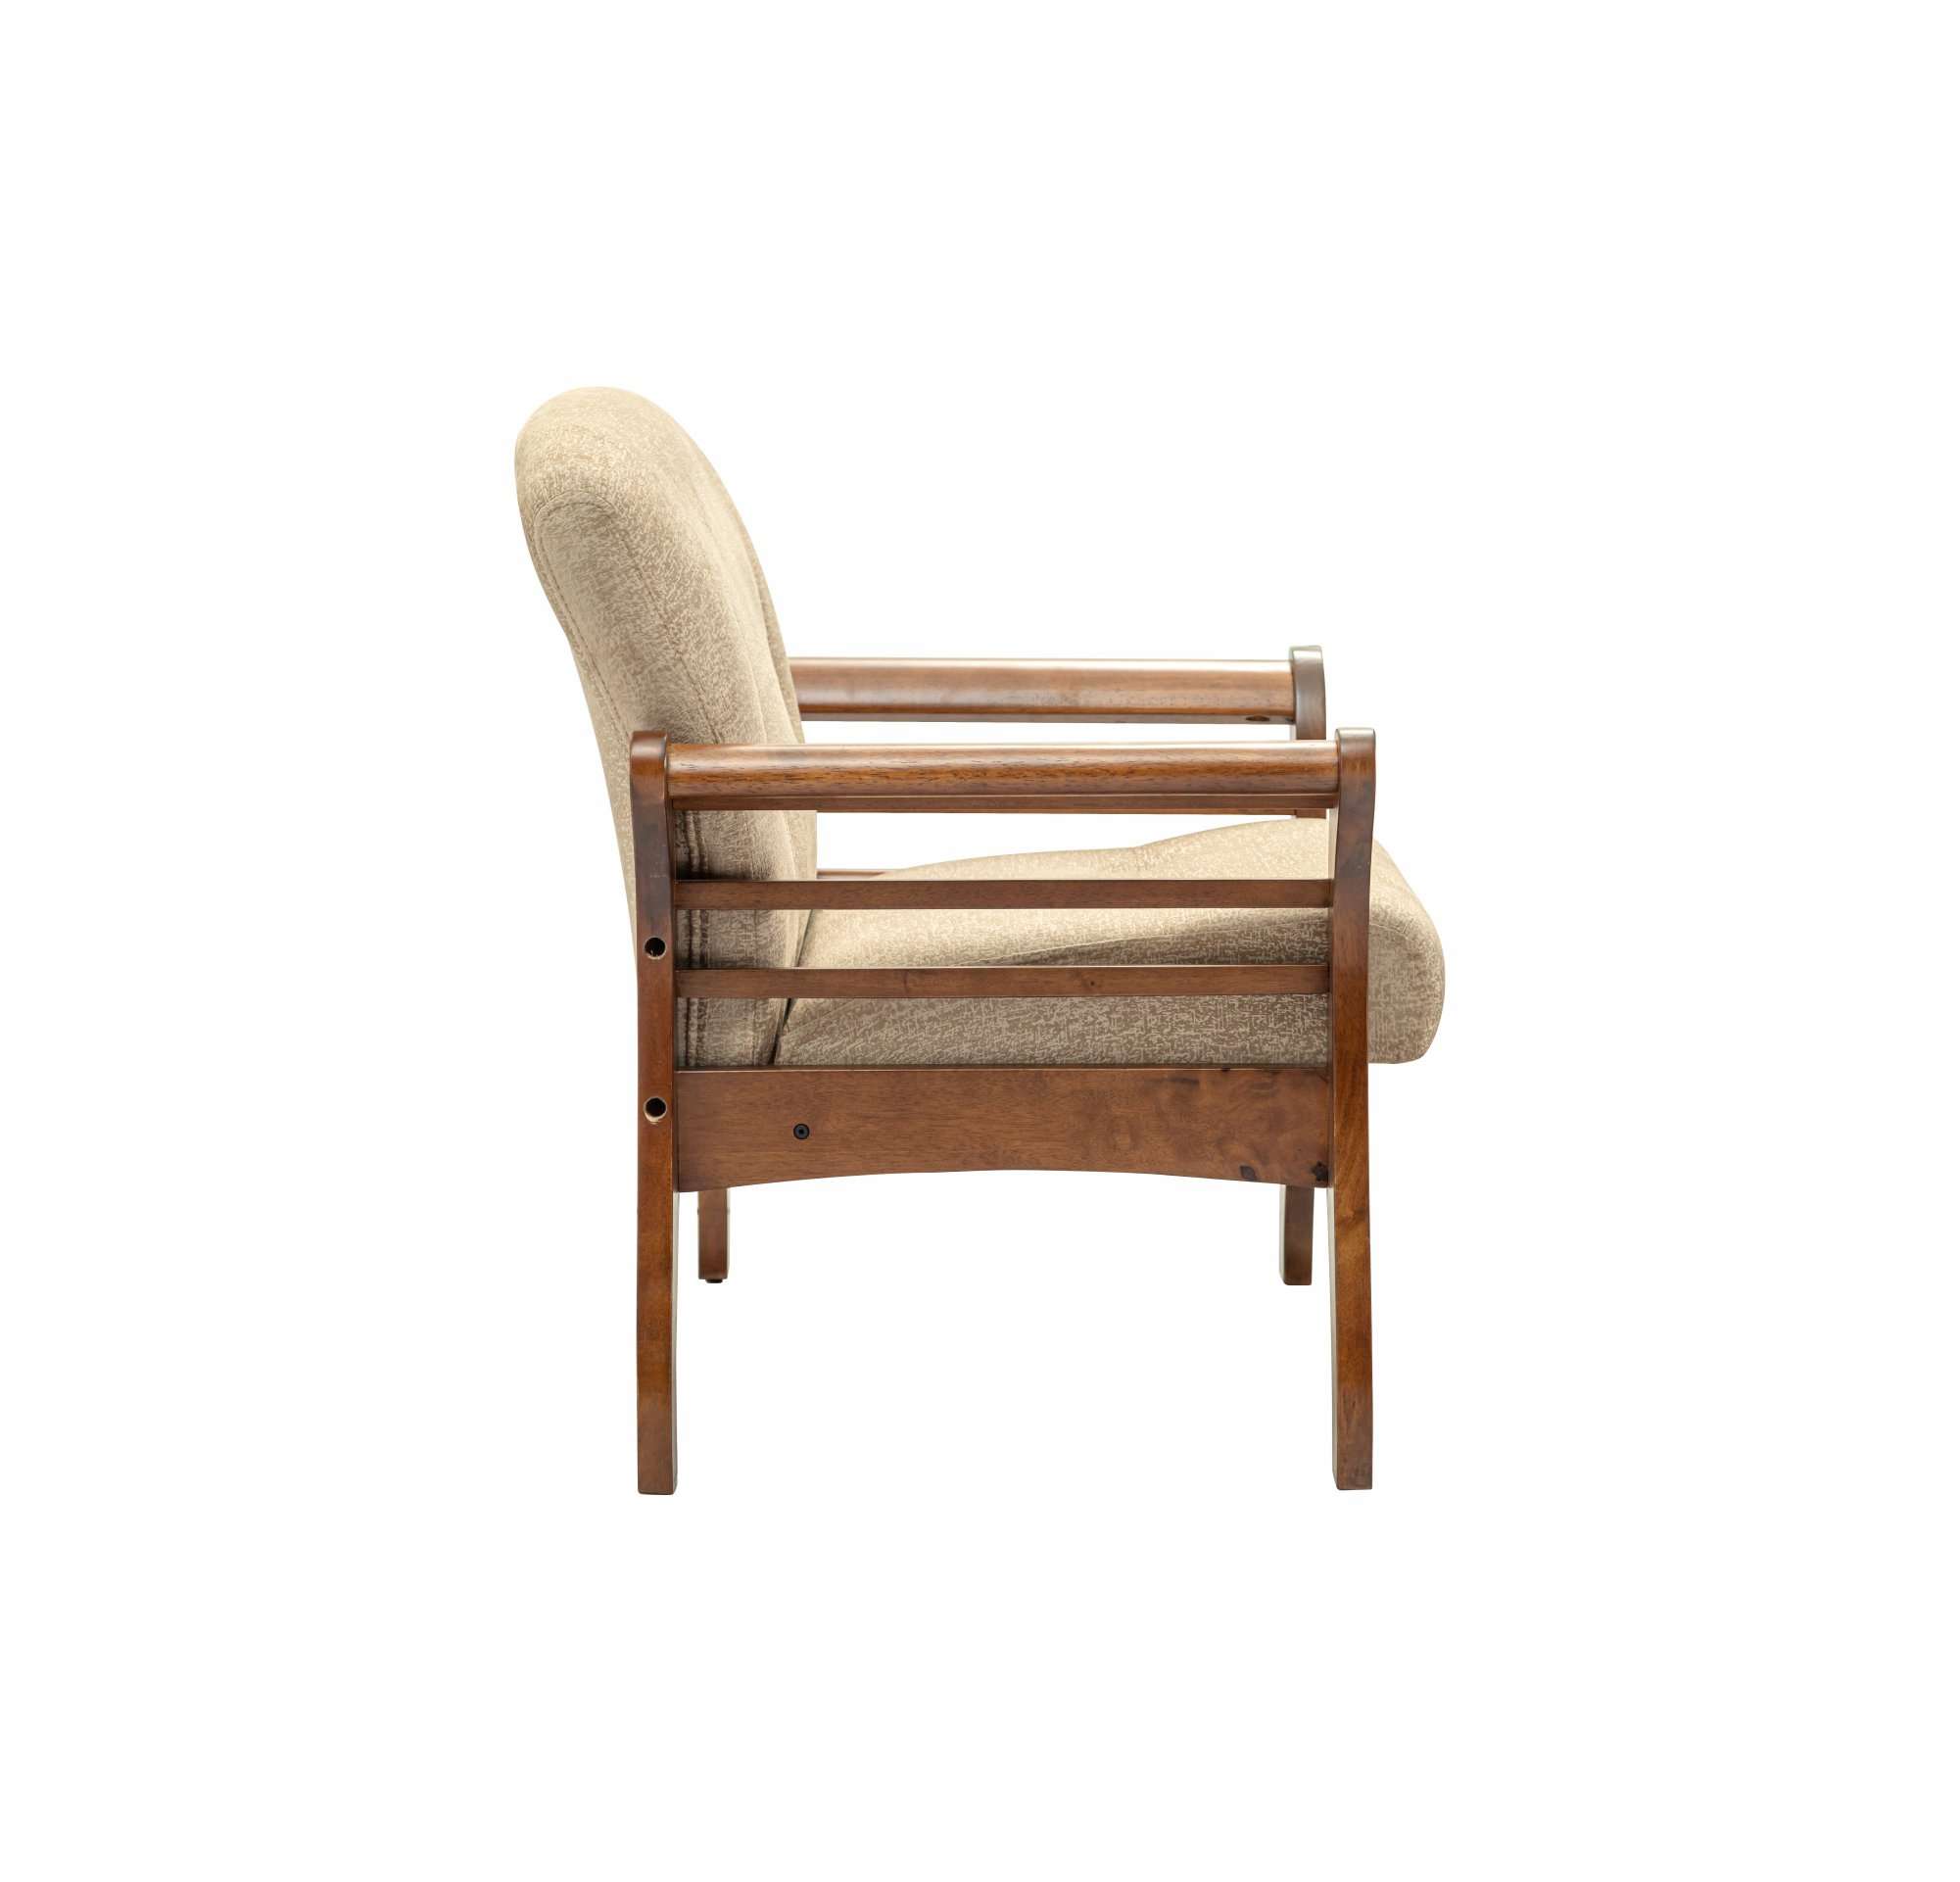 WSB001-Wooden Sofa Baywood 1 Seater-LB05/Dark Walnut